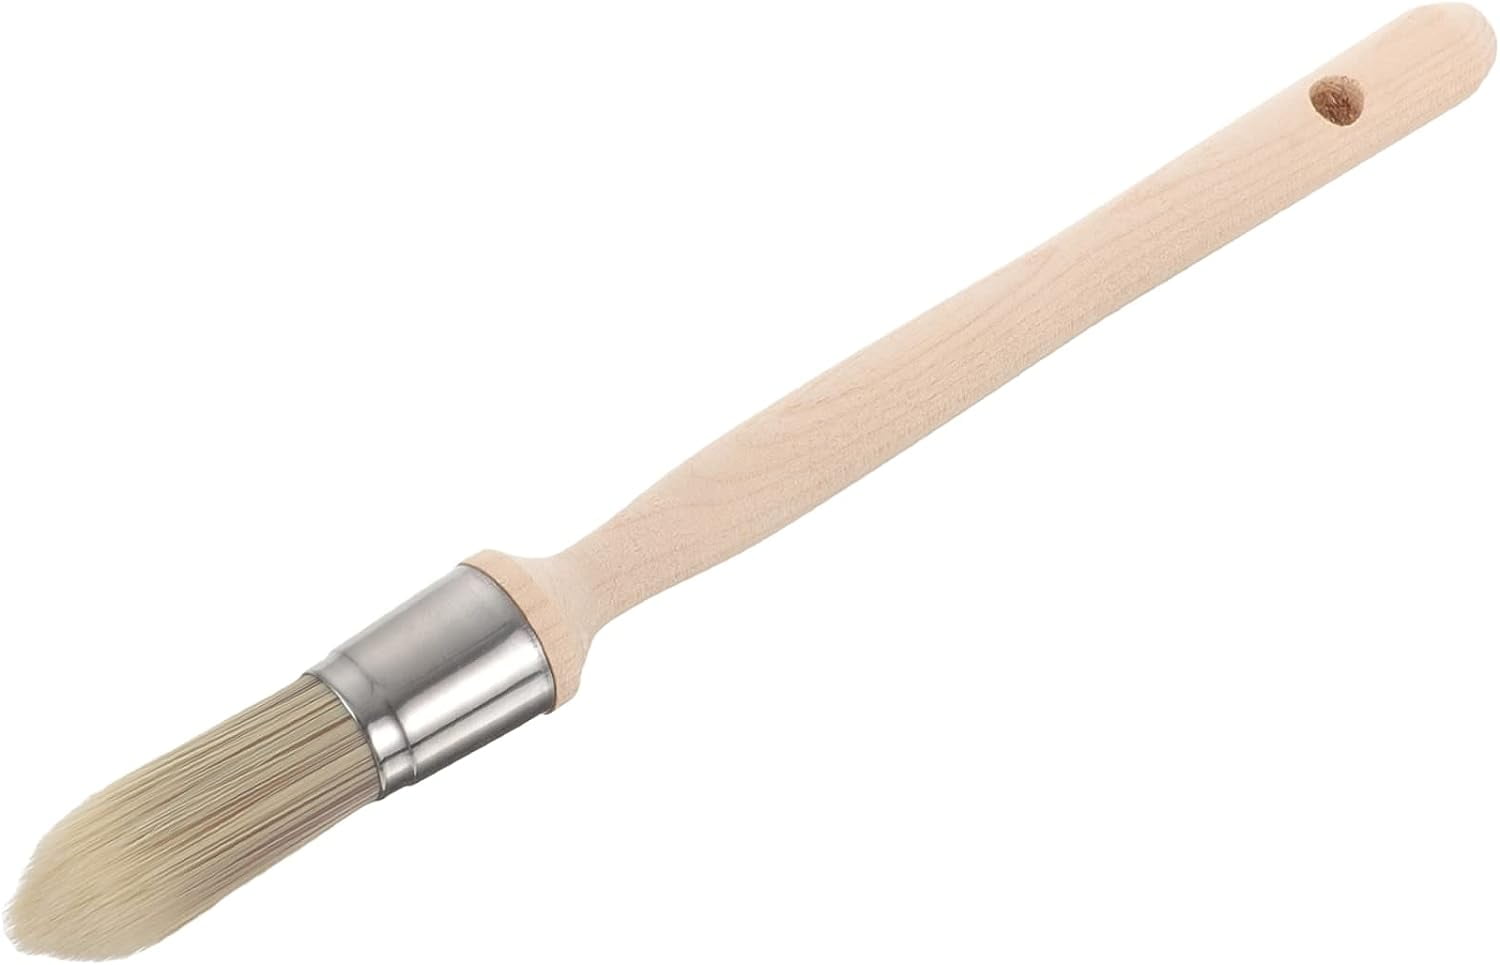 (6) Andrew Mack Brush Sword Striping Series 10 Sizes 000-3 Pinstriping  Brushes